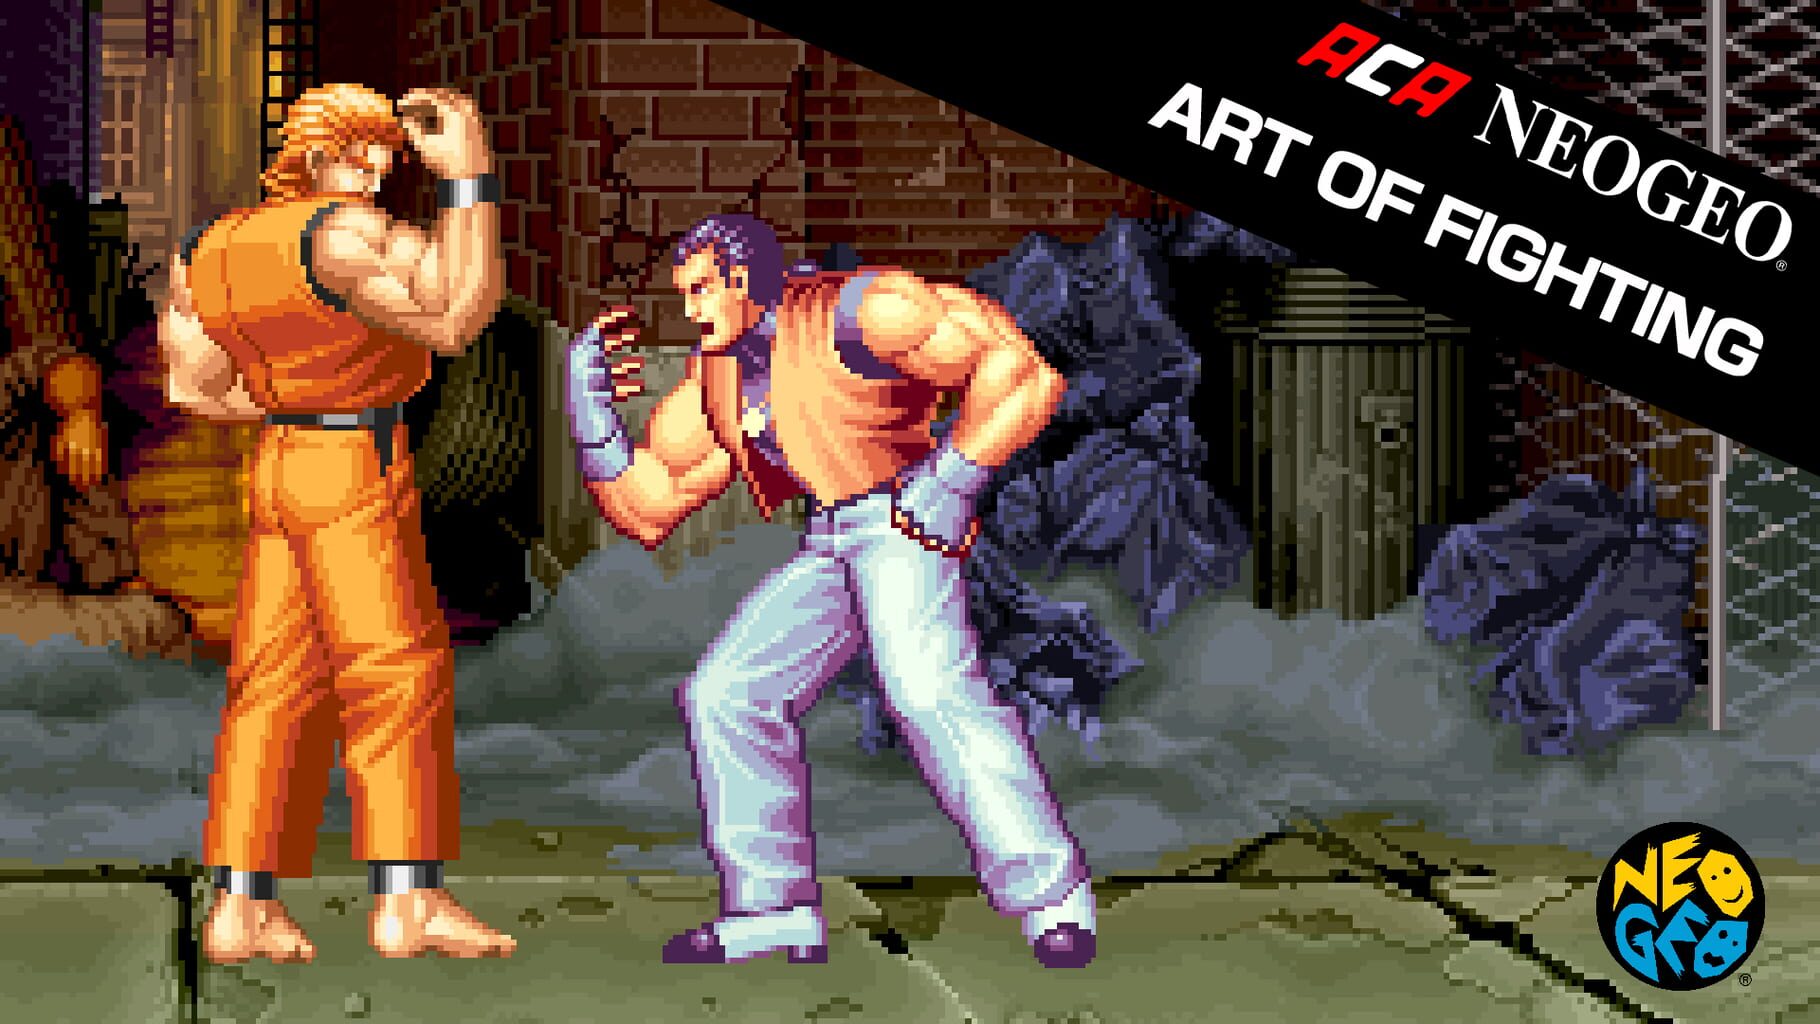 Arte - ACA Neo Geo: Art of Fighting